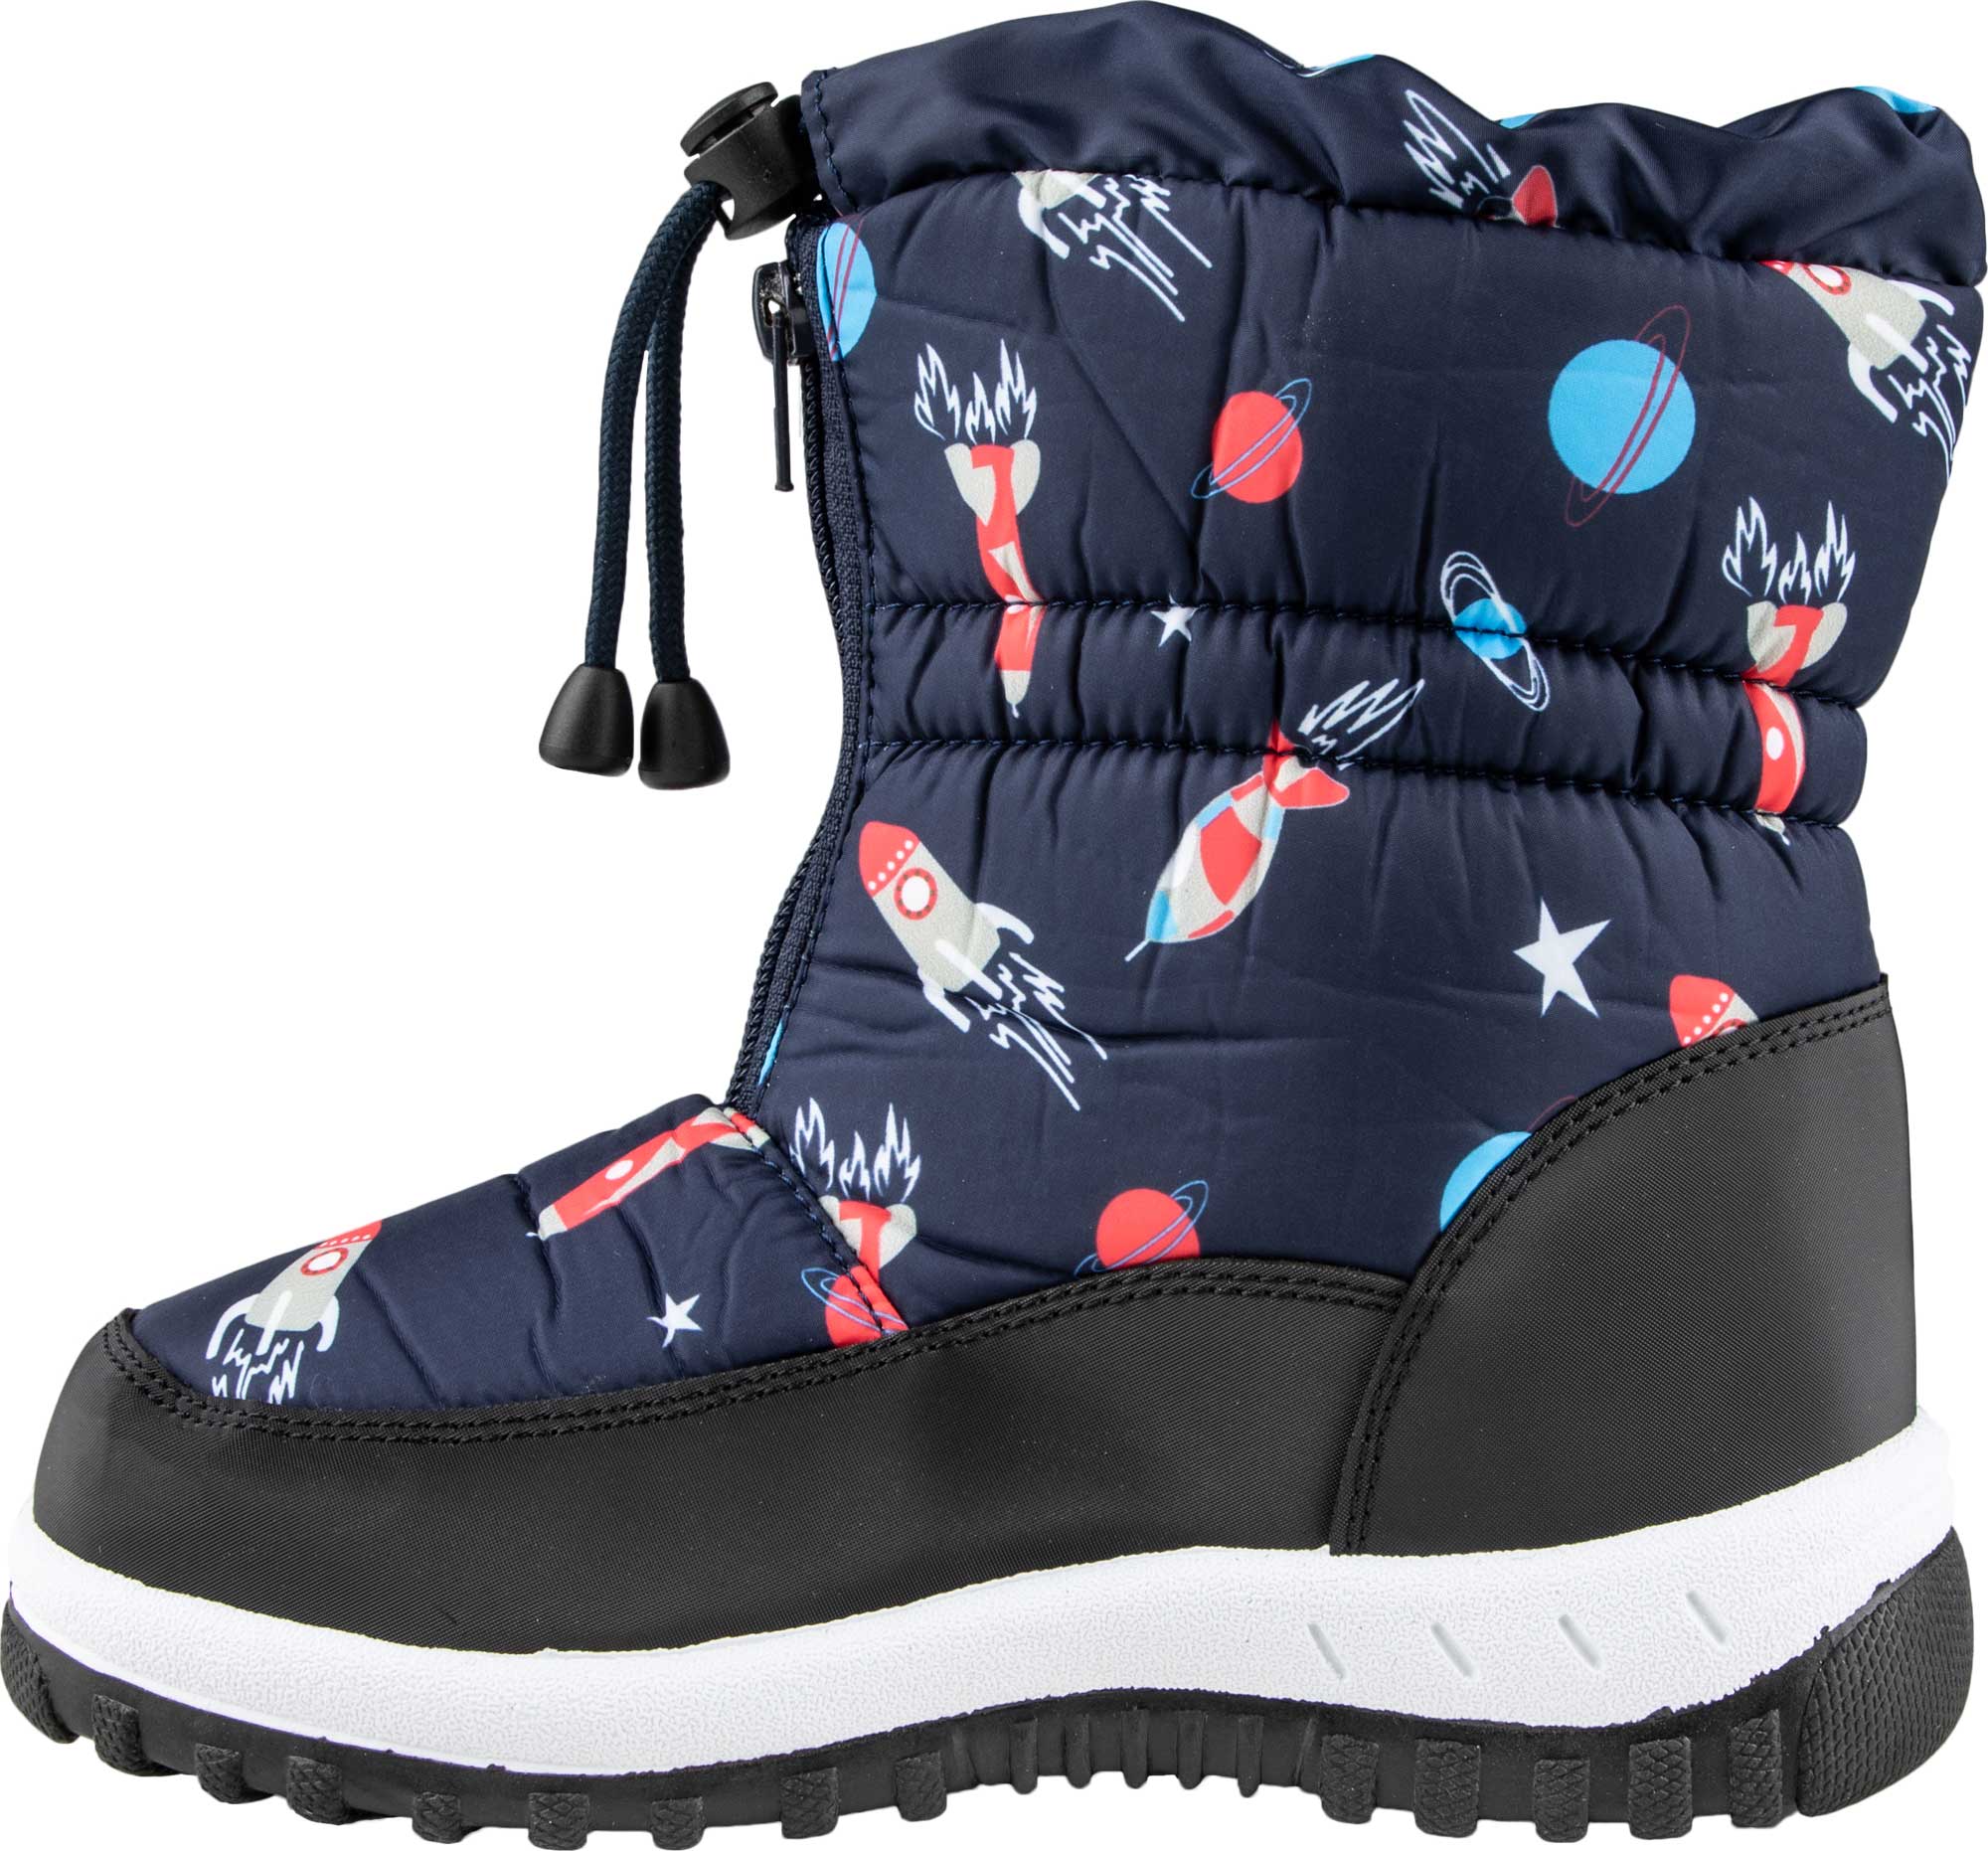 Kids’ winter shoes